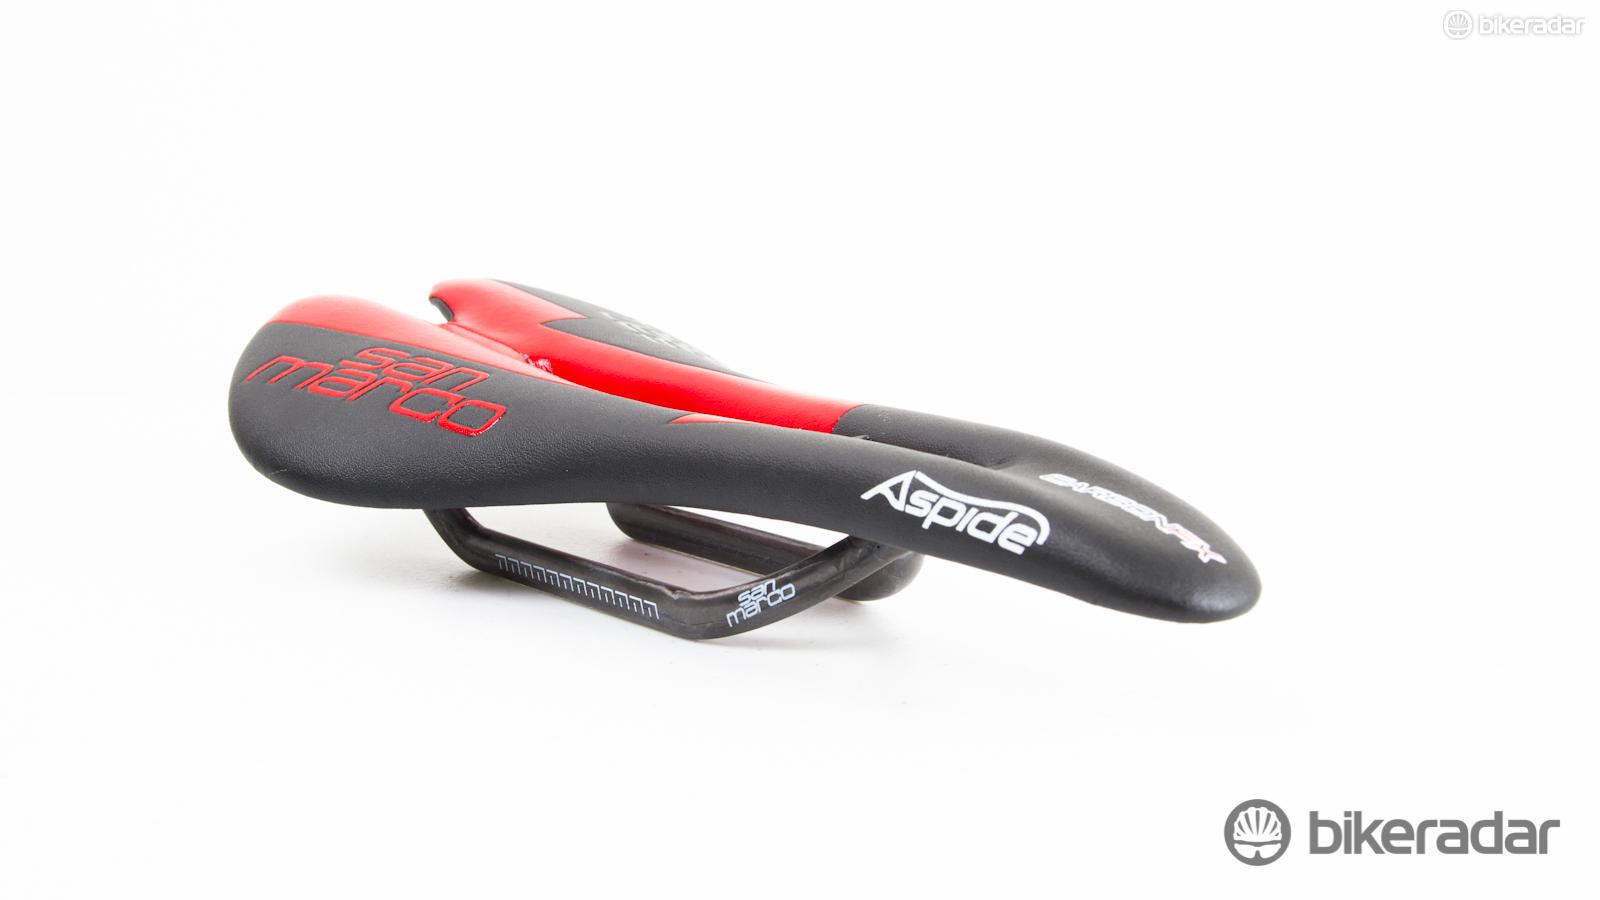 Selle San Marco Aspide Carbon FX saddle review - BikeRadar